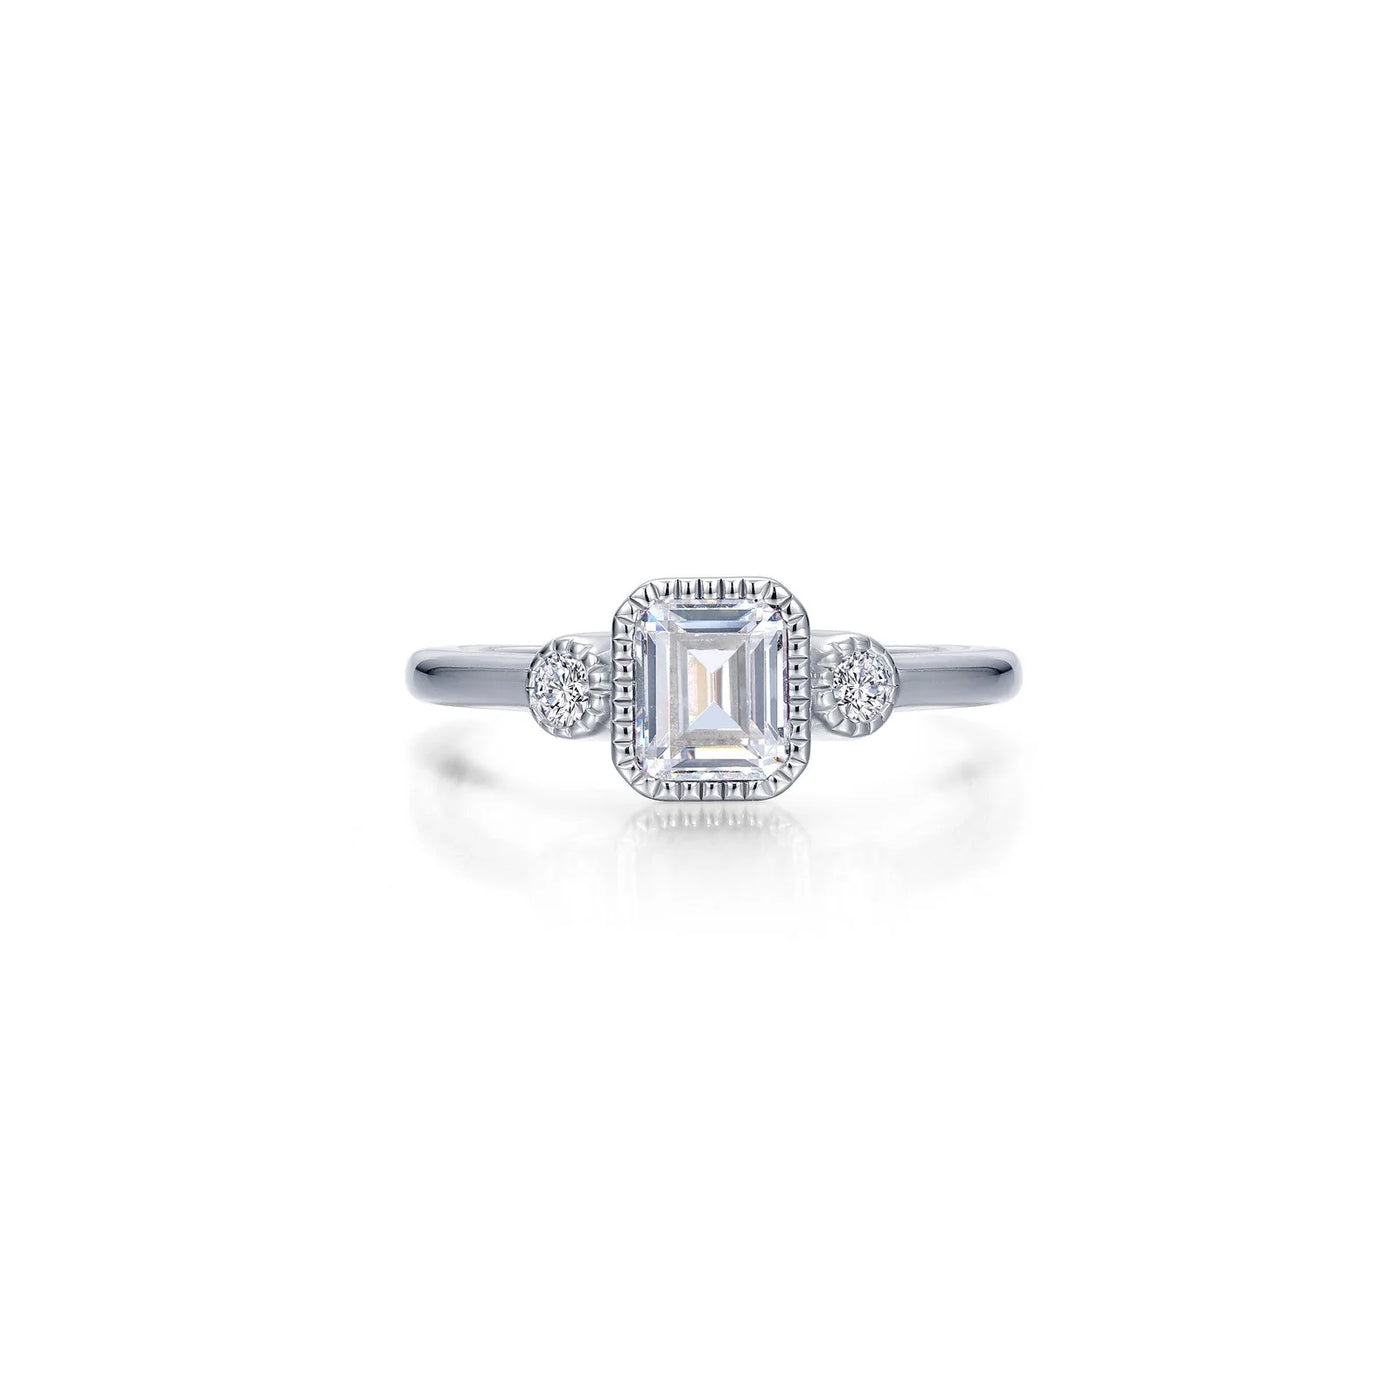 Simulated Emerald-Cut Diamond April Birthstone Ring